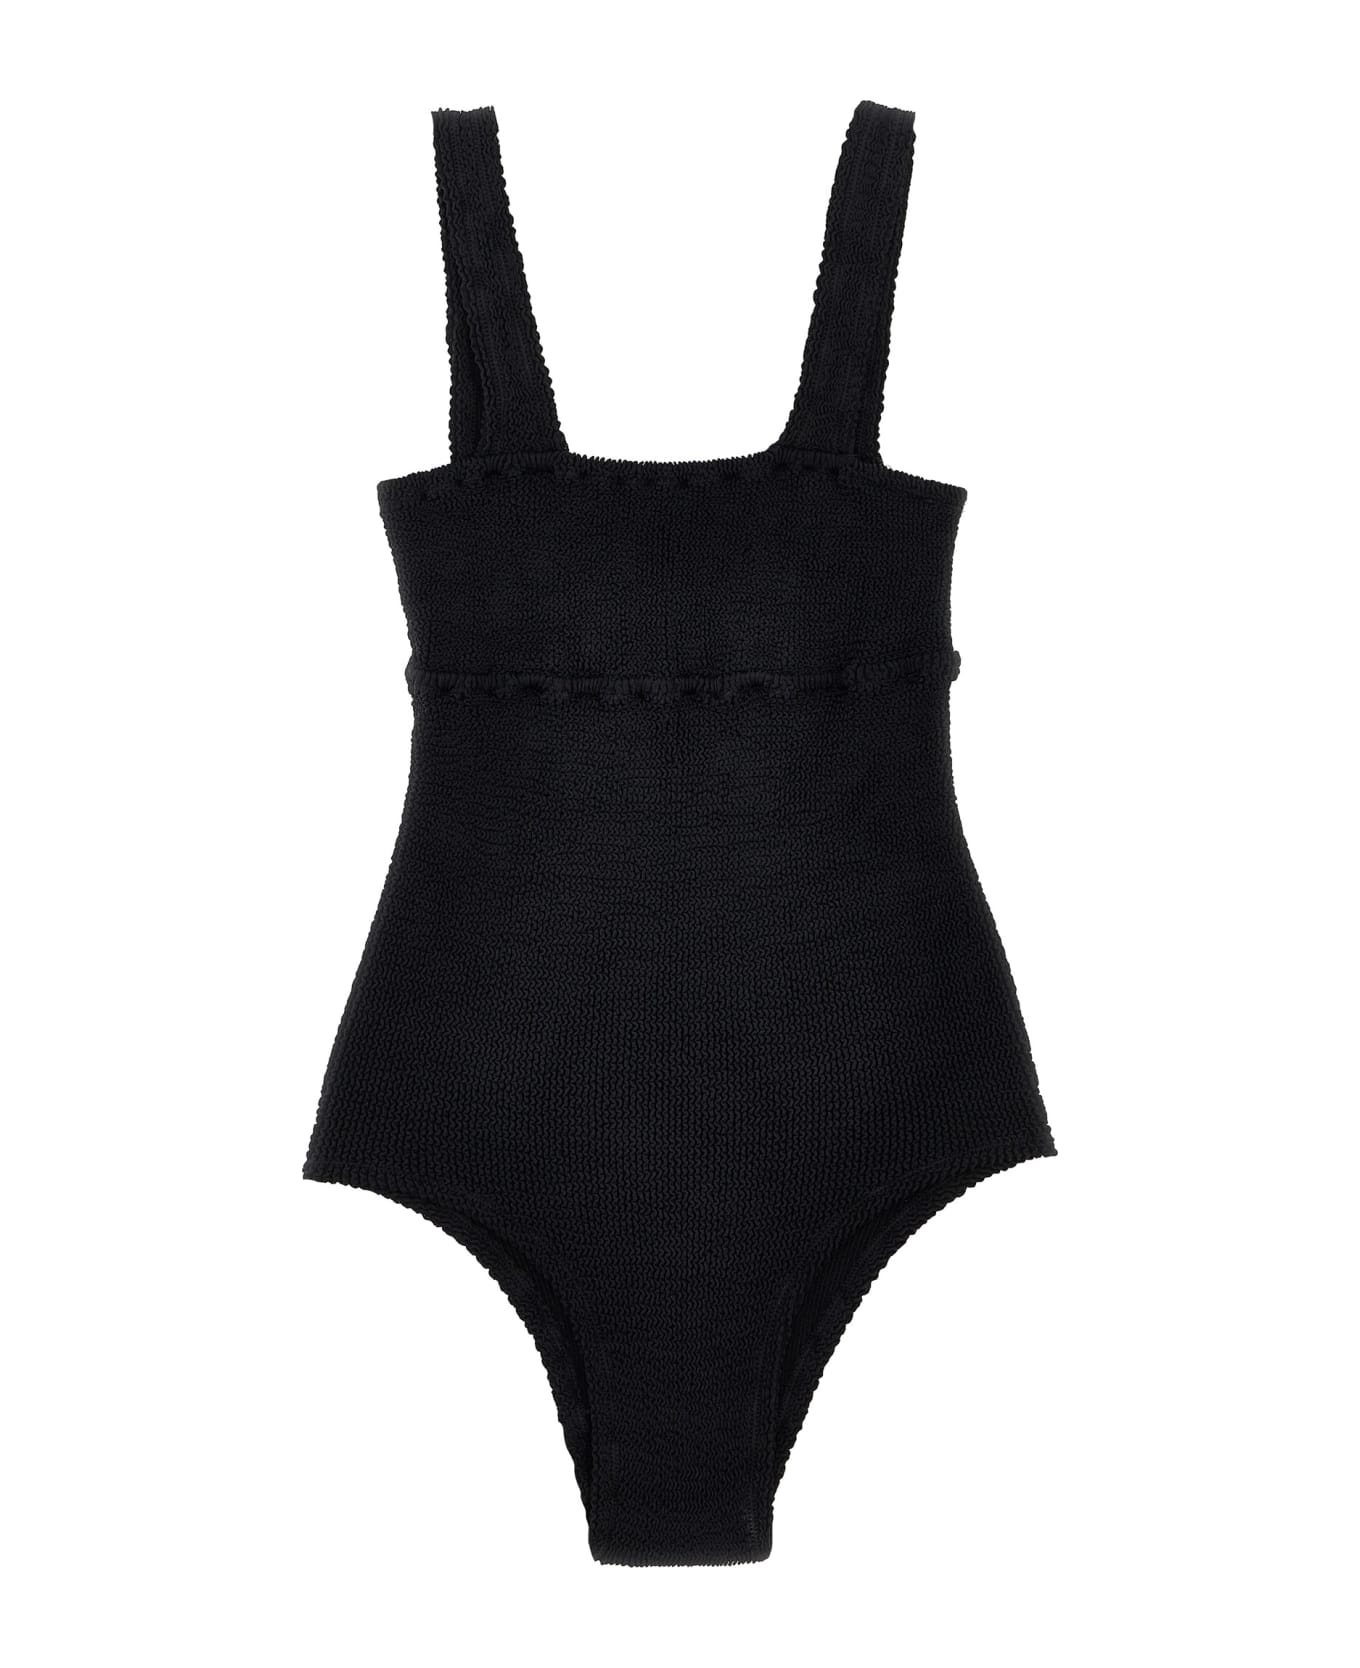 Reina Olga 'lucia' One-piece Swimsuit - Black   水着